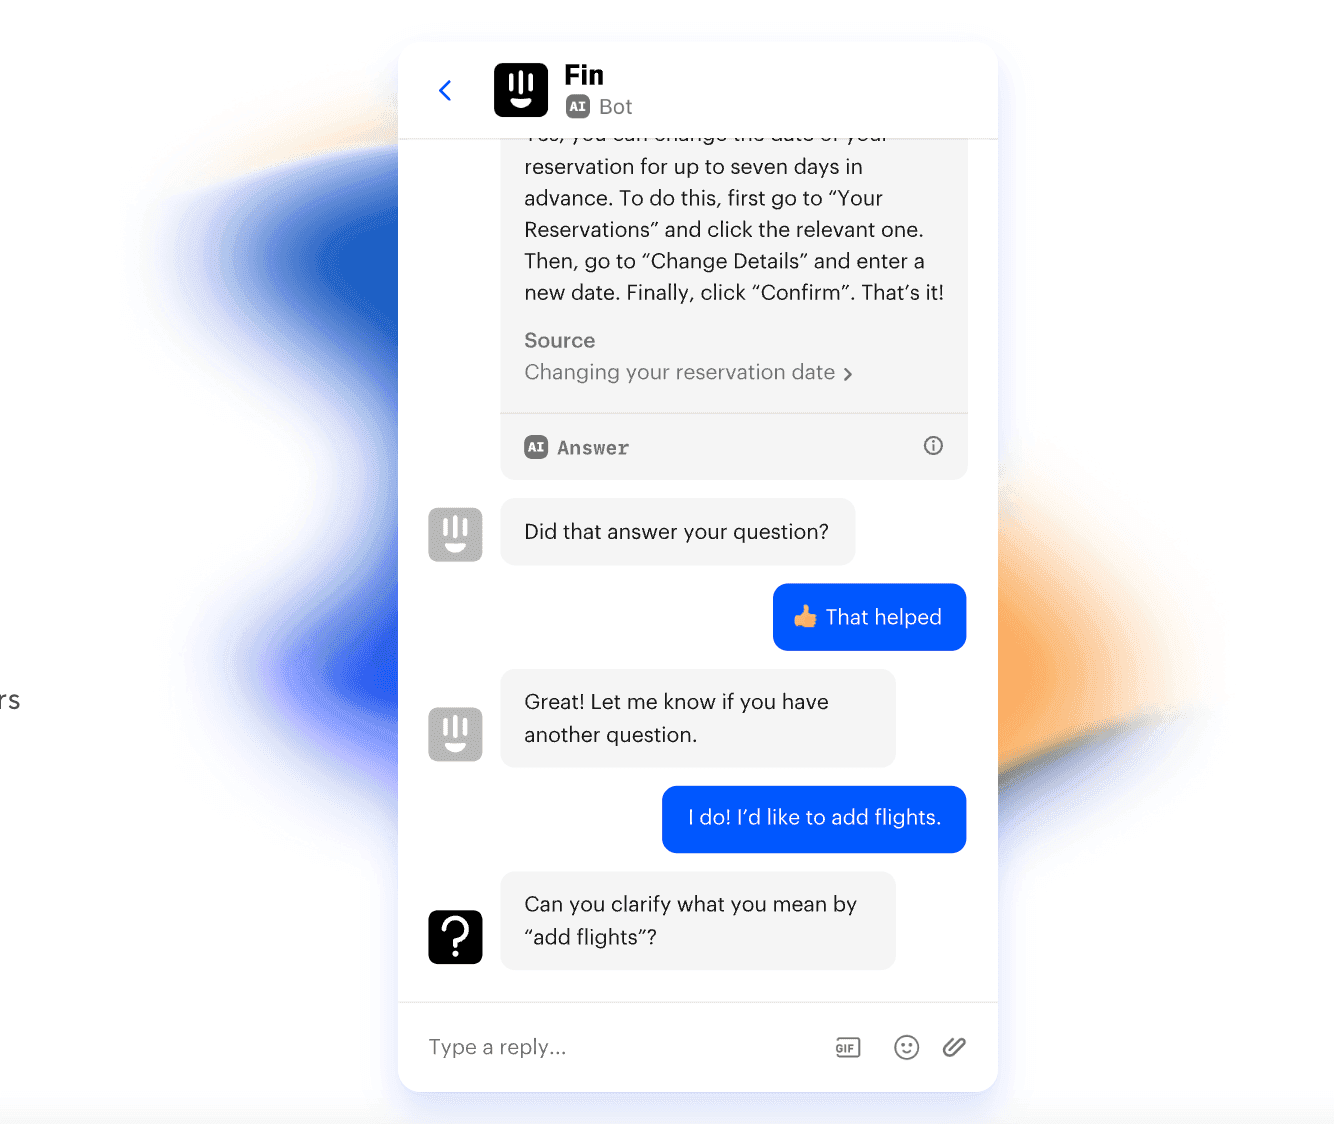 Screenshot of Intercom AI Chatbot conversation